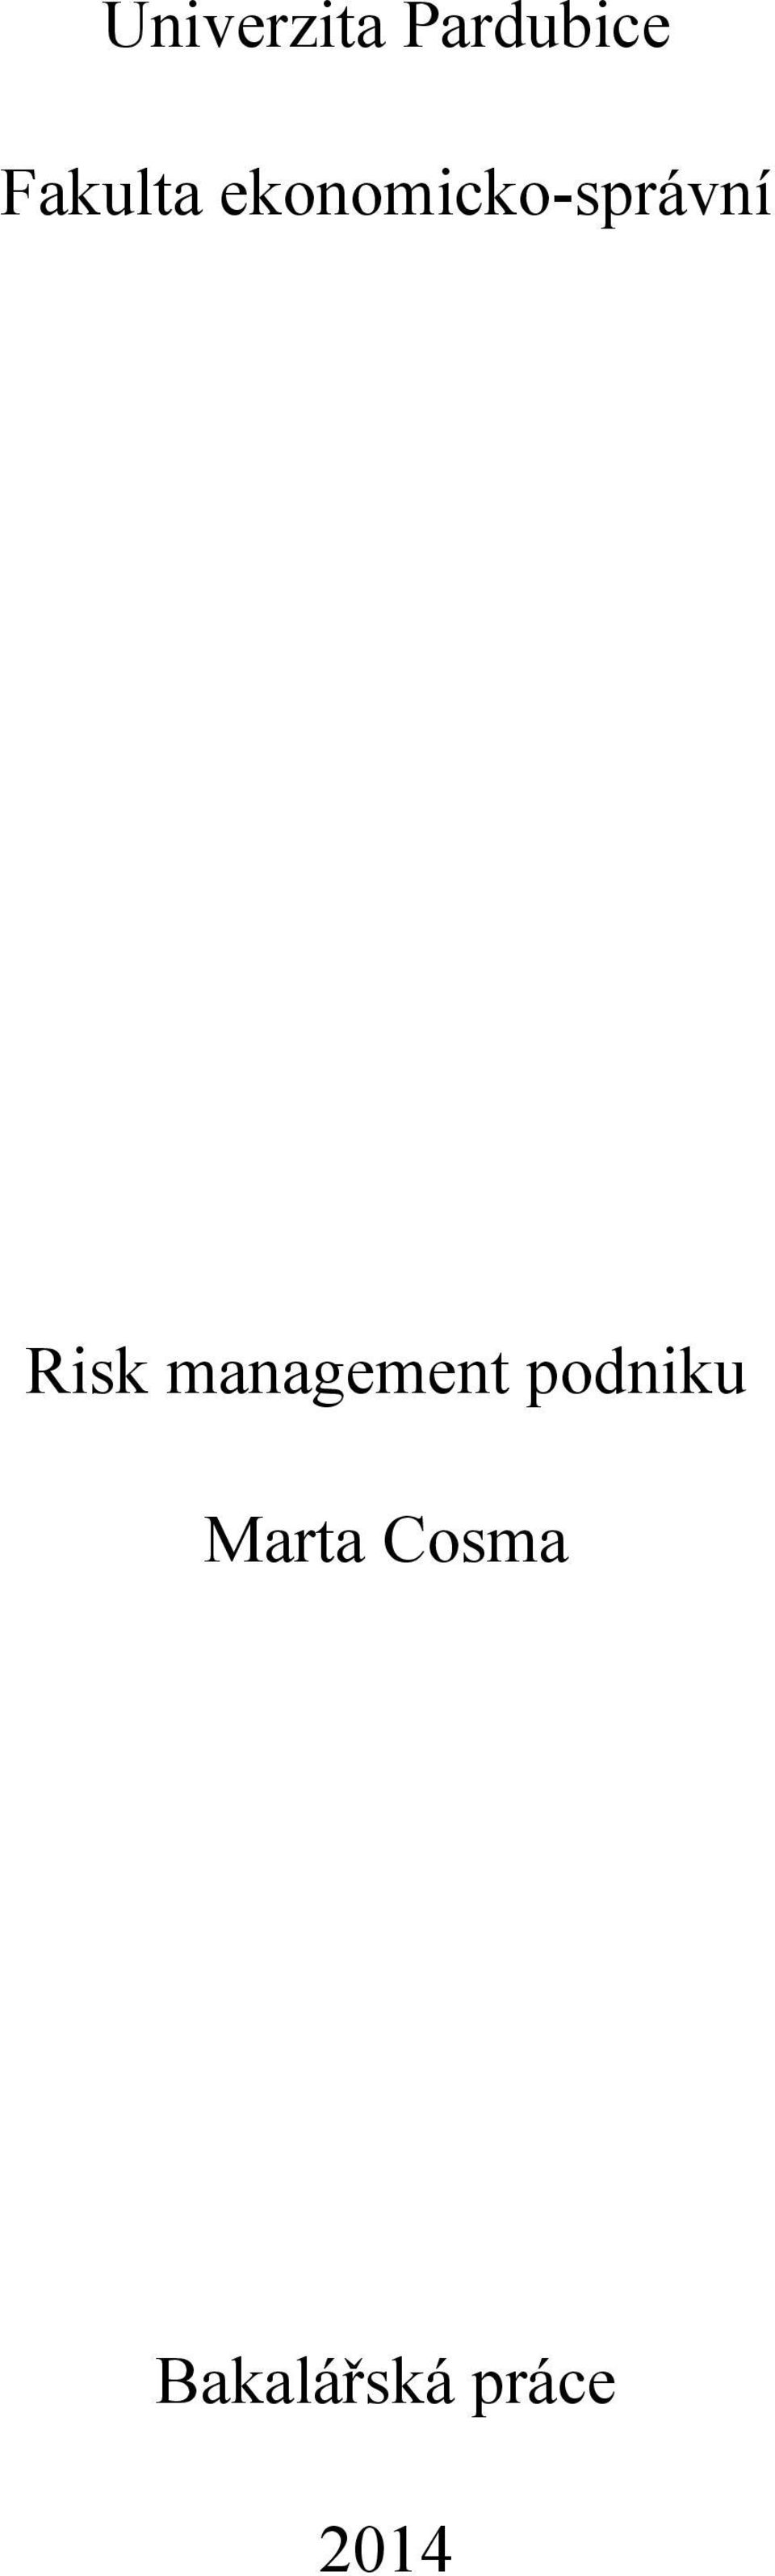 Risk management podniku